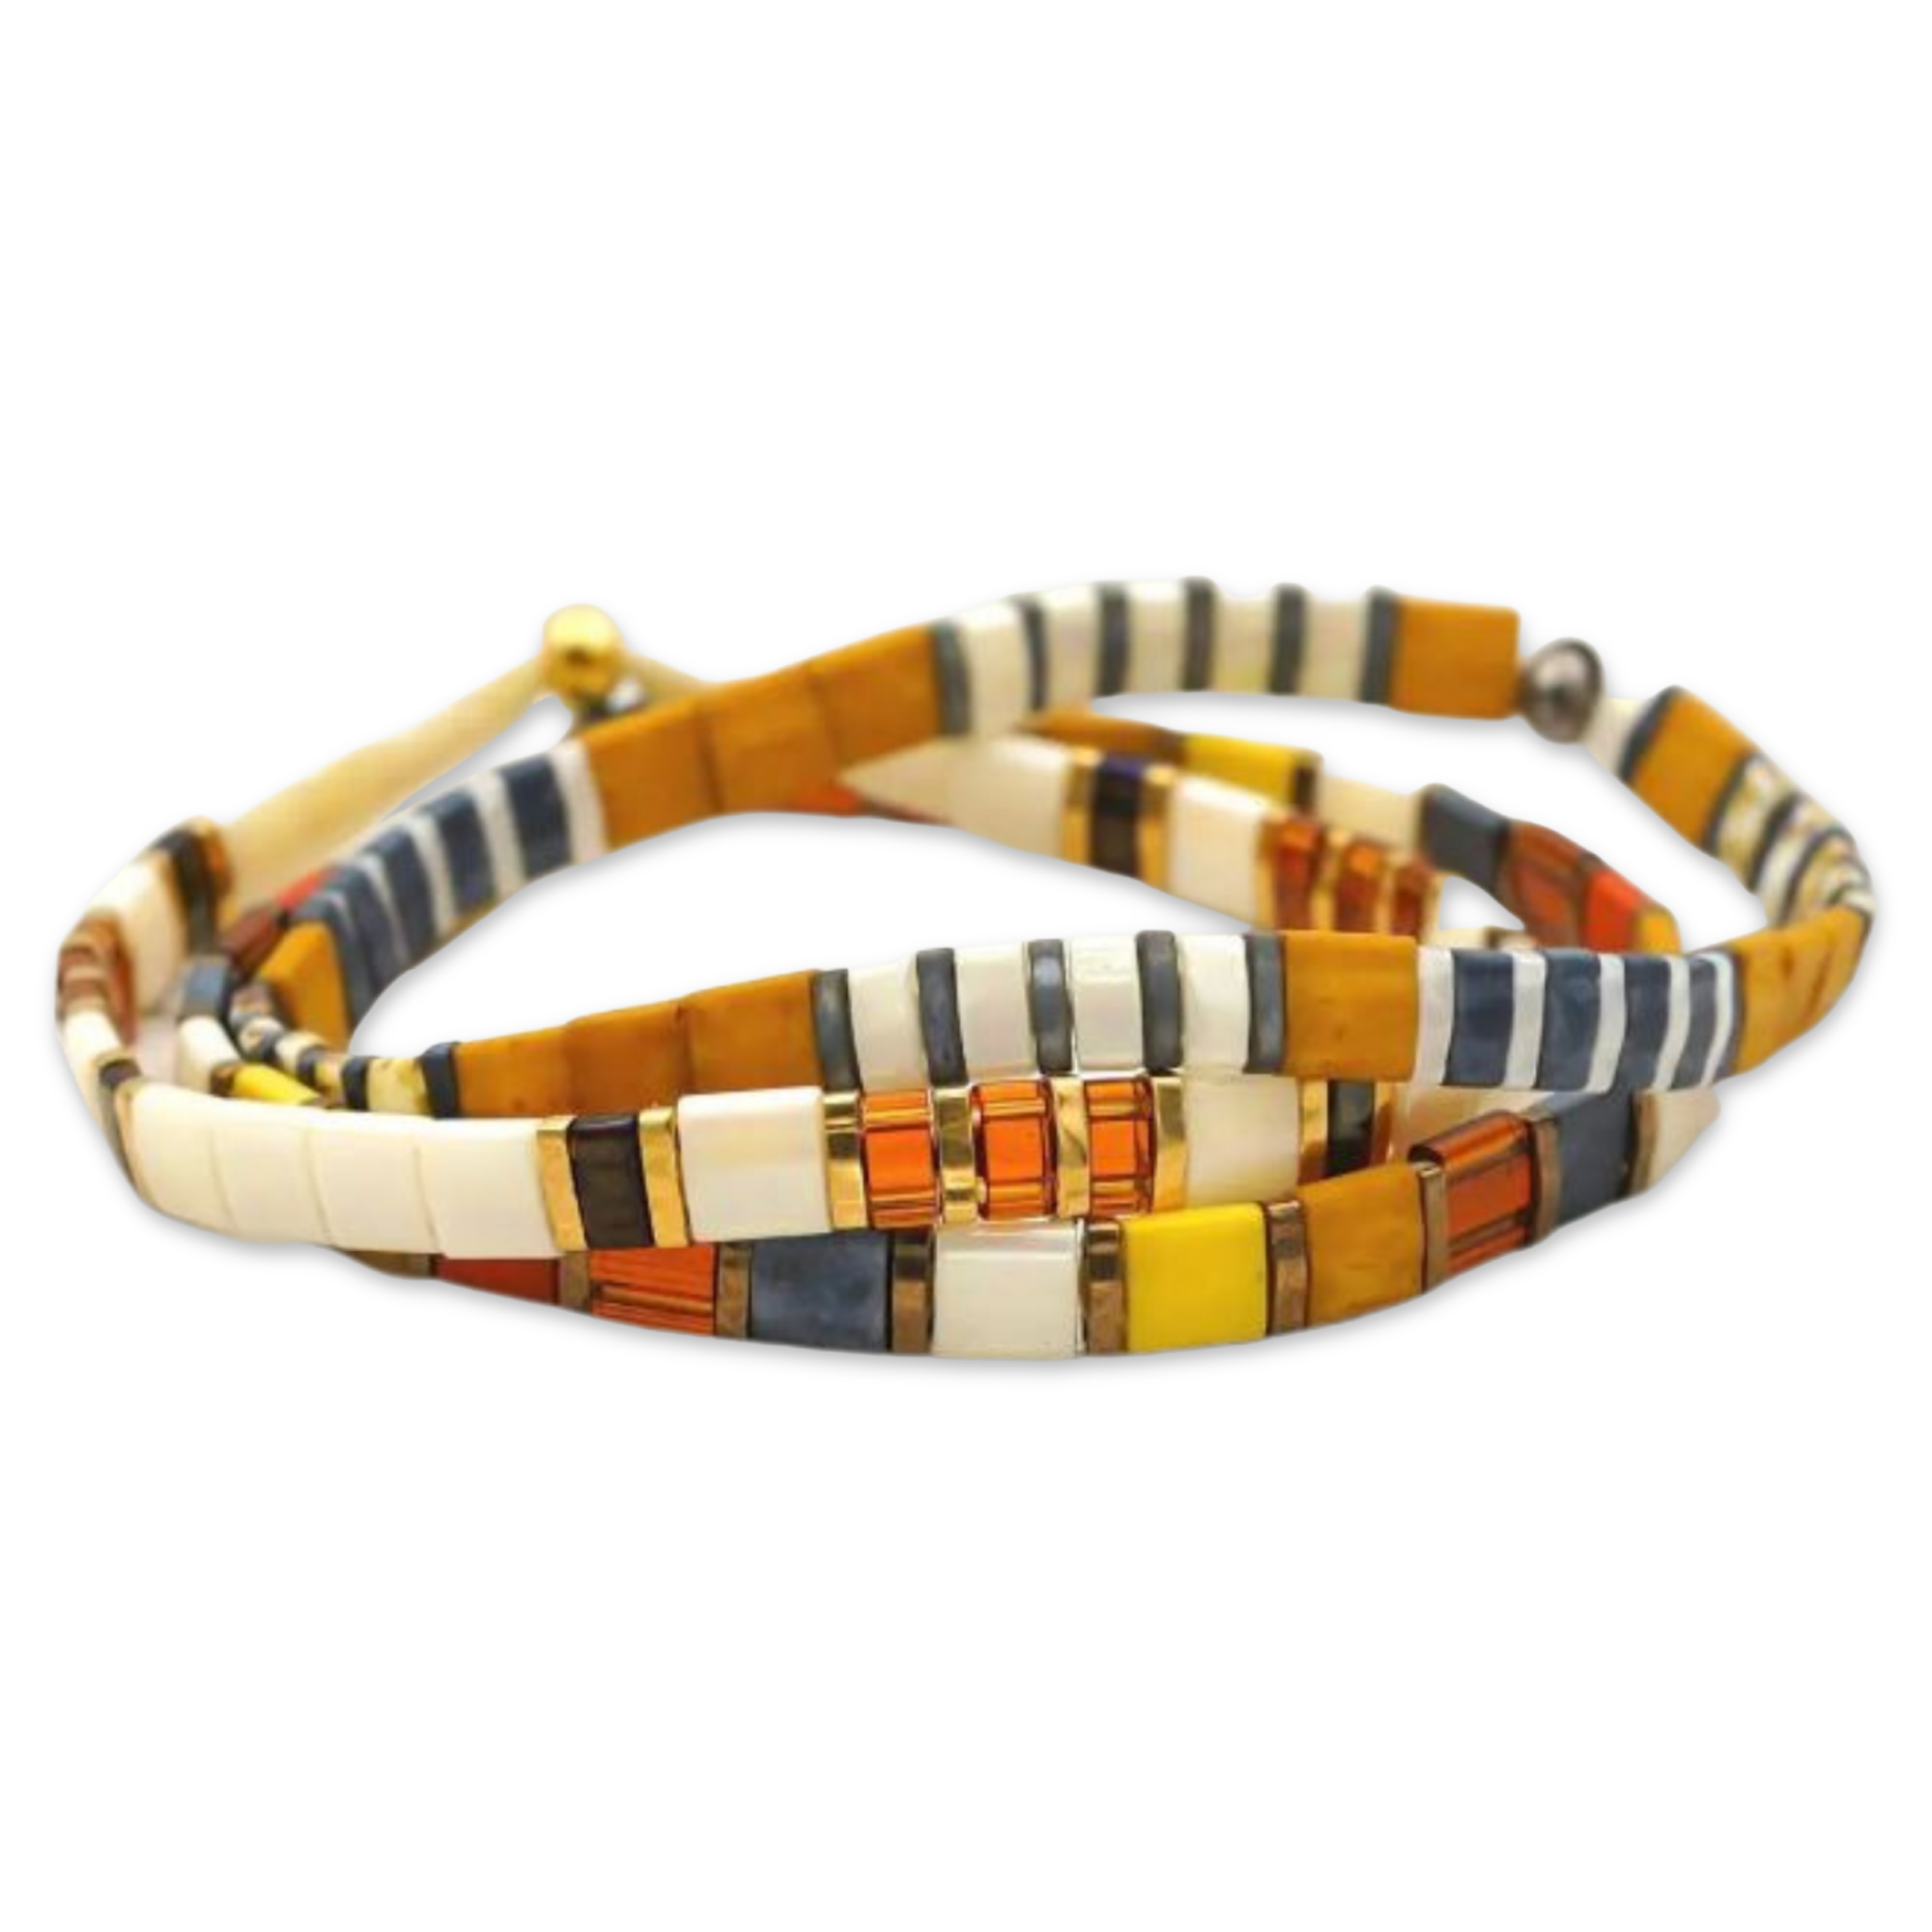 SUGARLAND Cute Tila Bead Bracelets for Women POPULAR Beaded Bracelets for  Girls and Teens Boho Bracelets Mack & Rex 